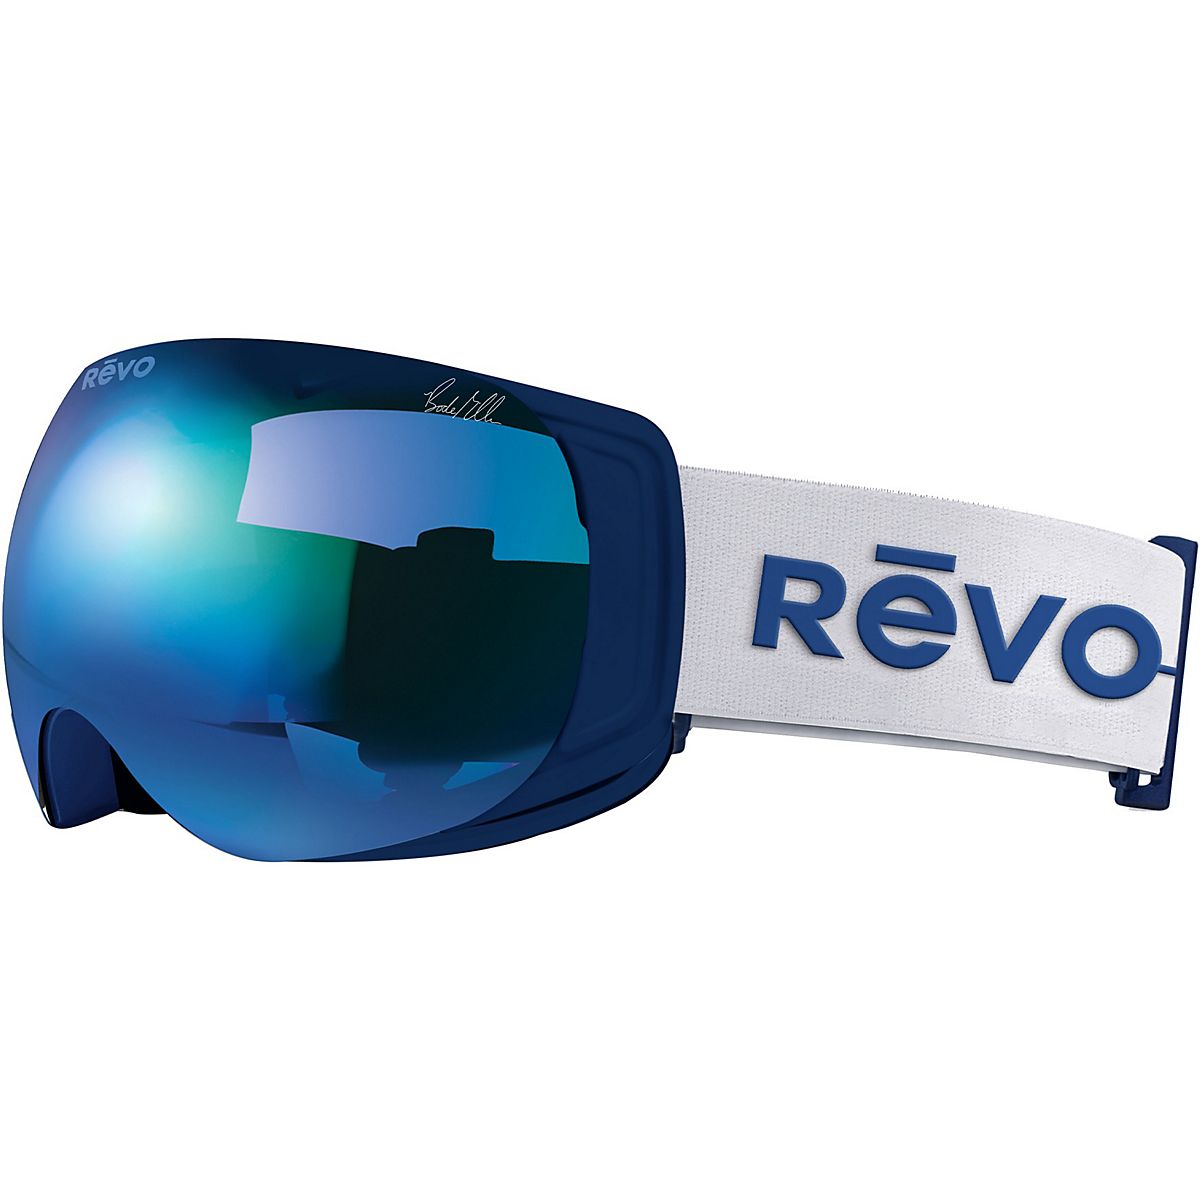 Revo Bode Miller No. 5 Ski Goggles | Free Shipping at Academy